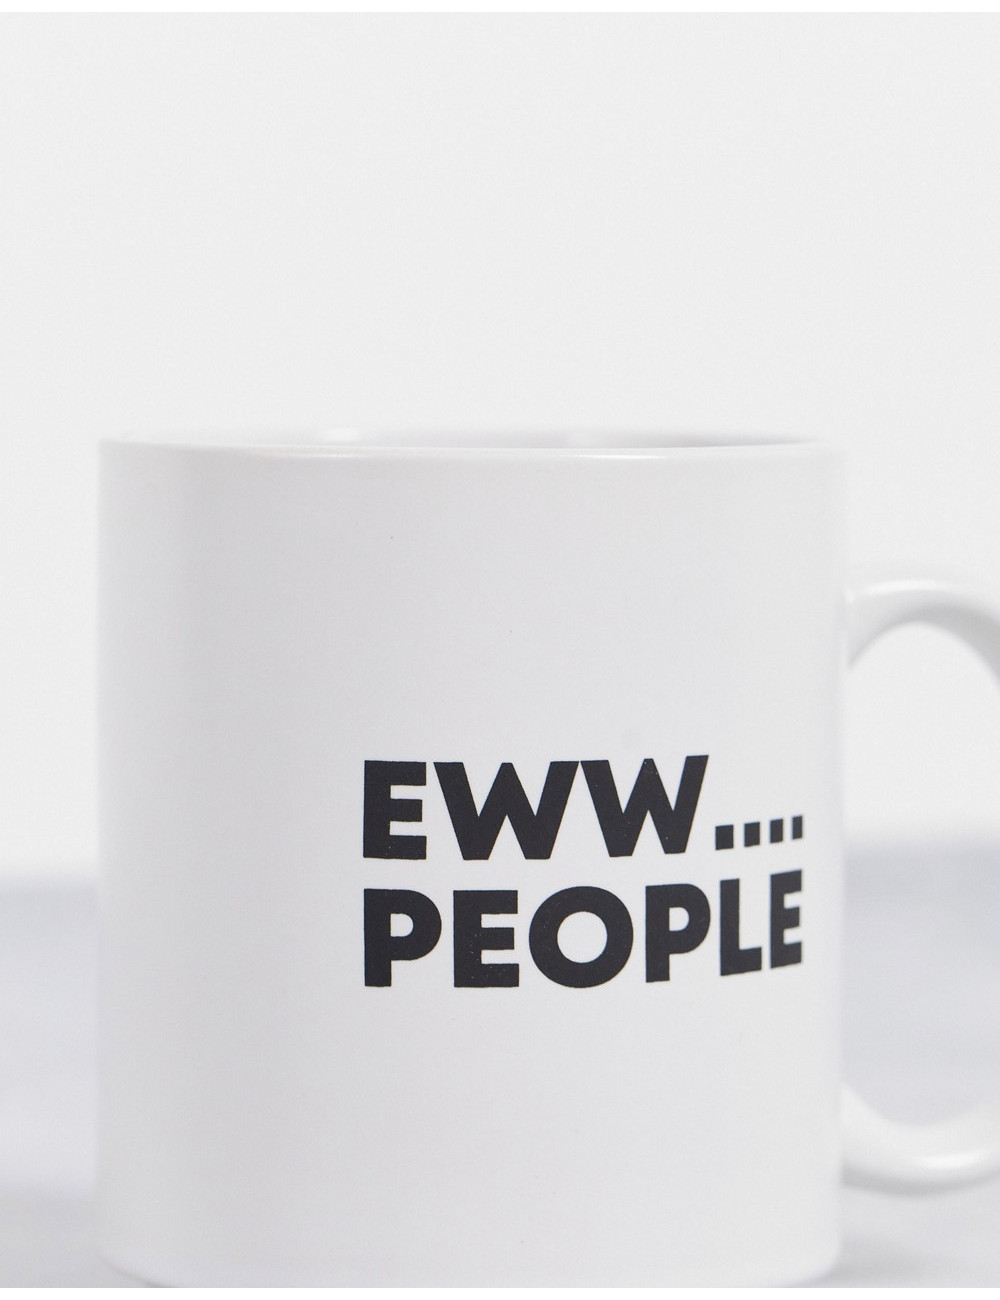 Typo mug with eww people...